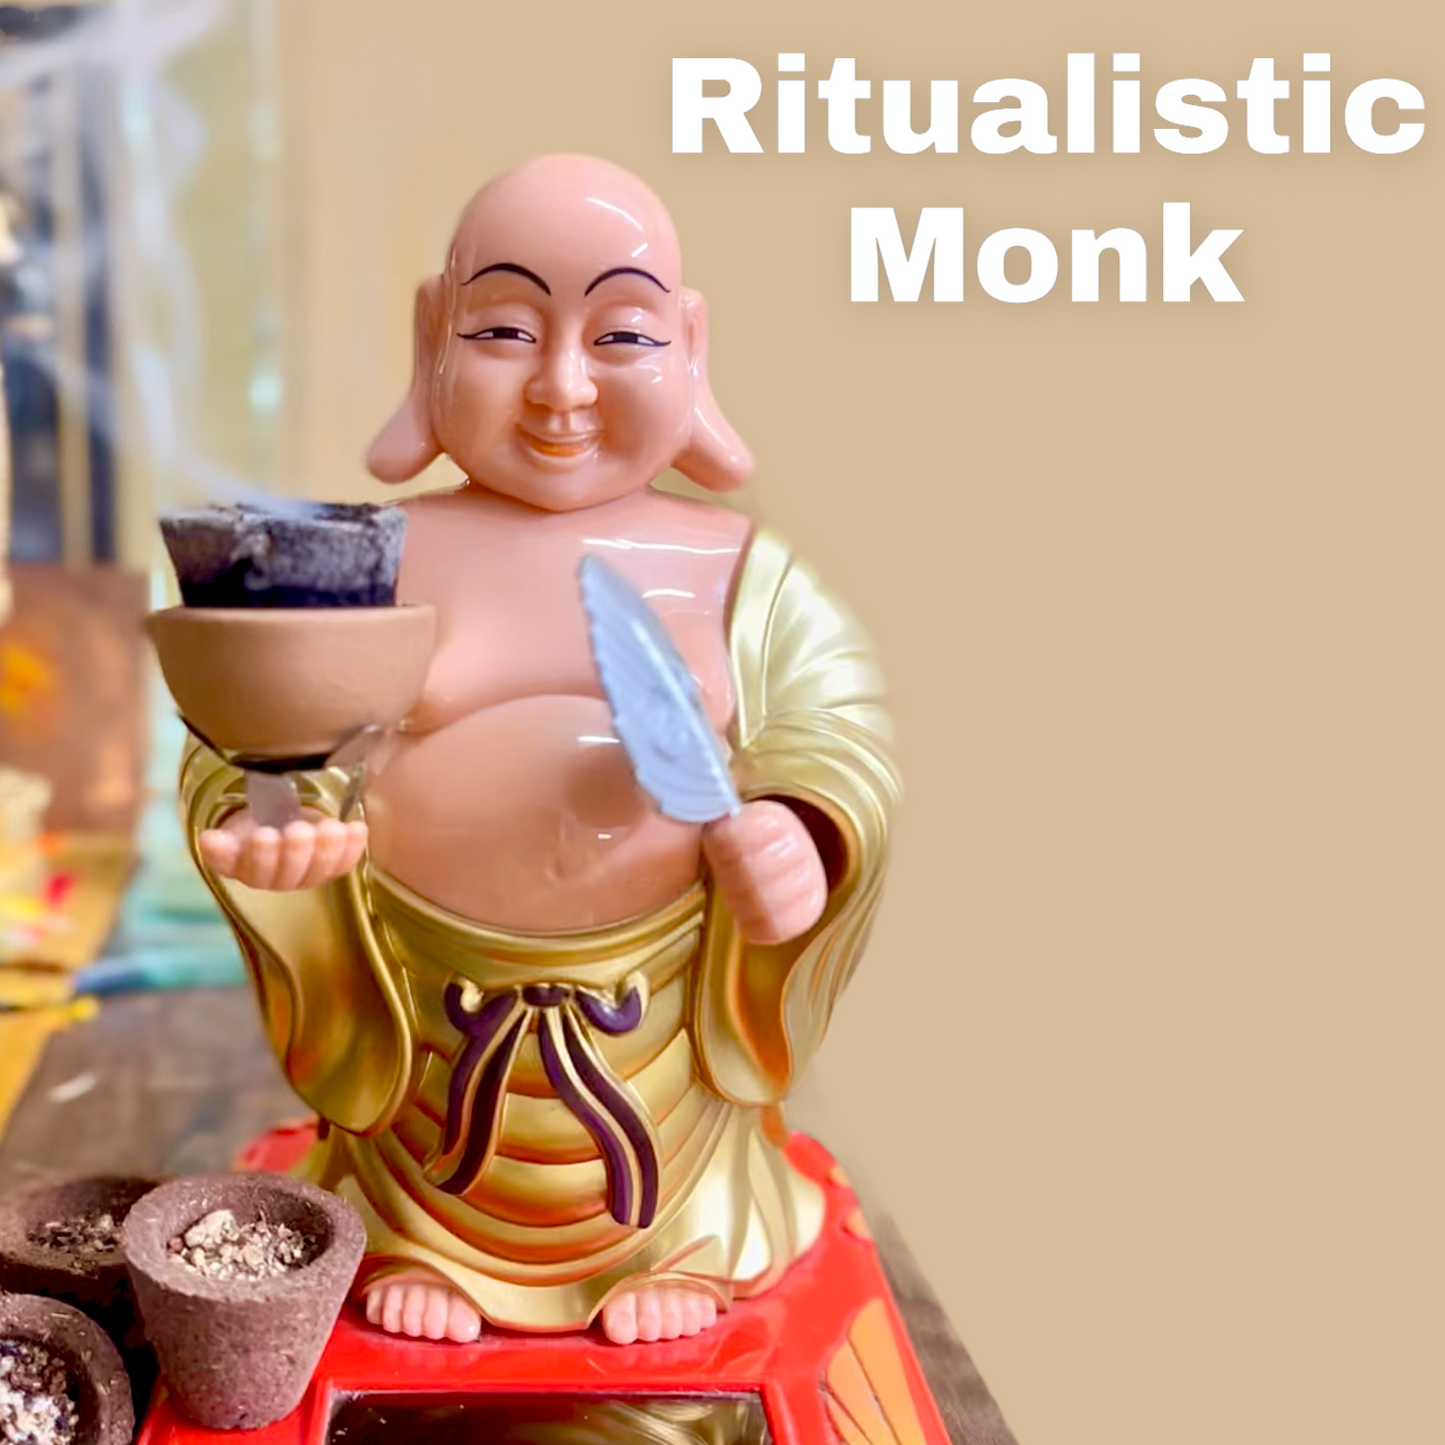 Ritualistic Monk